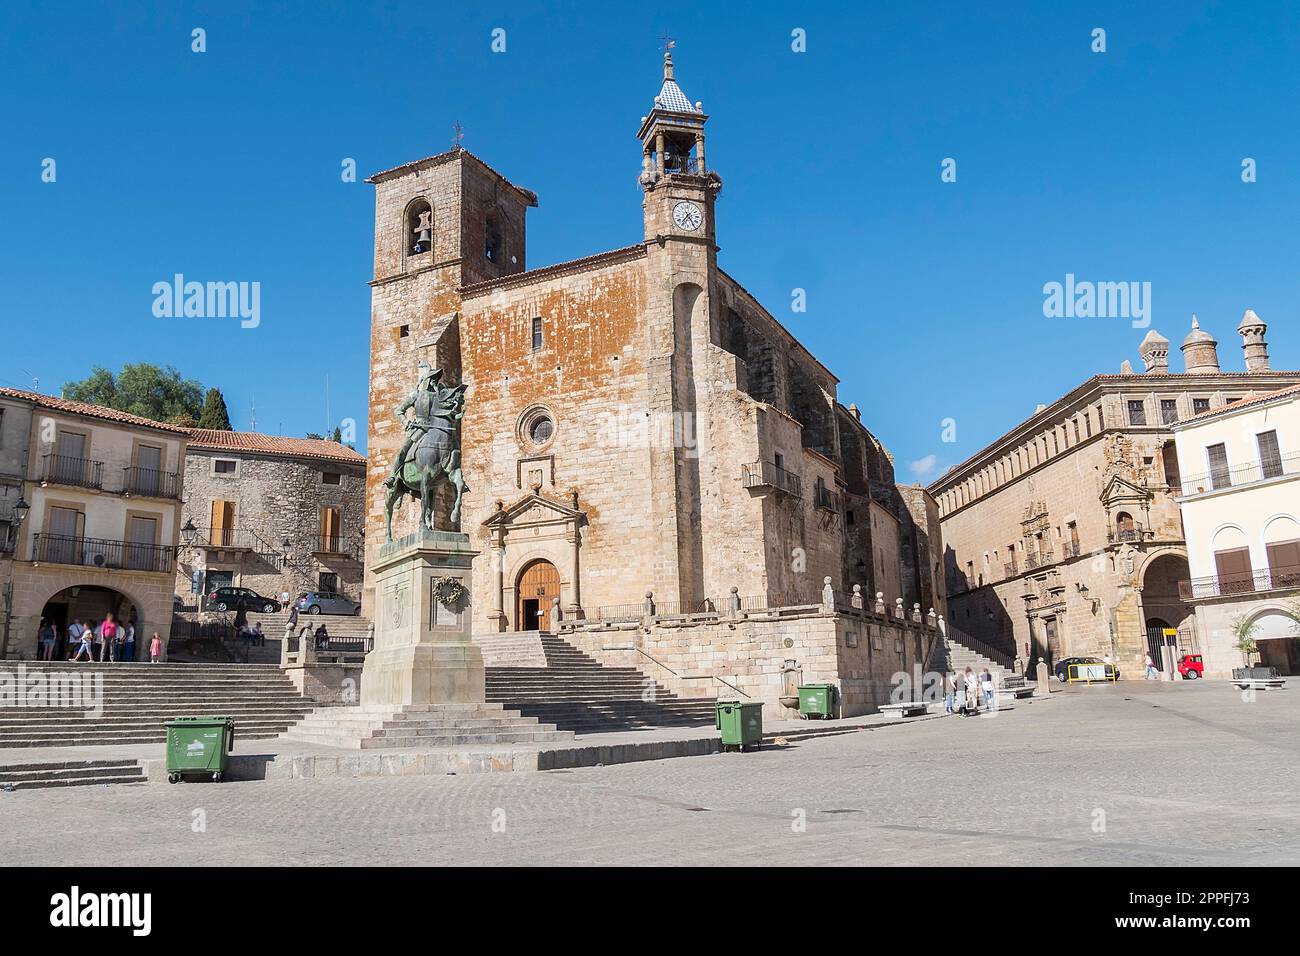 Trujillo main square. Church of San Martin Tours and statue of Francisco Pisarro (Trujillo, Caceres, Spain) Stock Photo